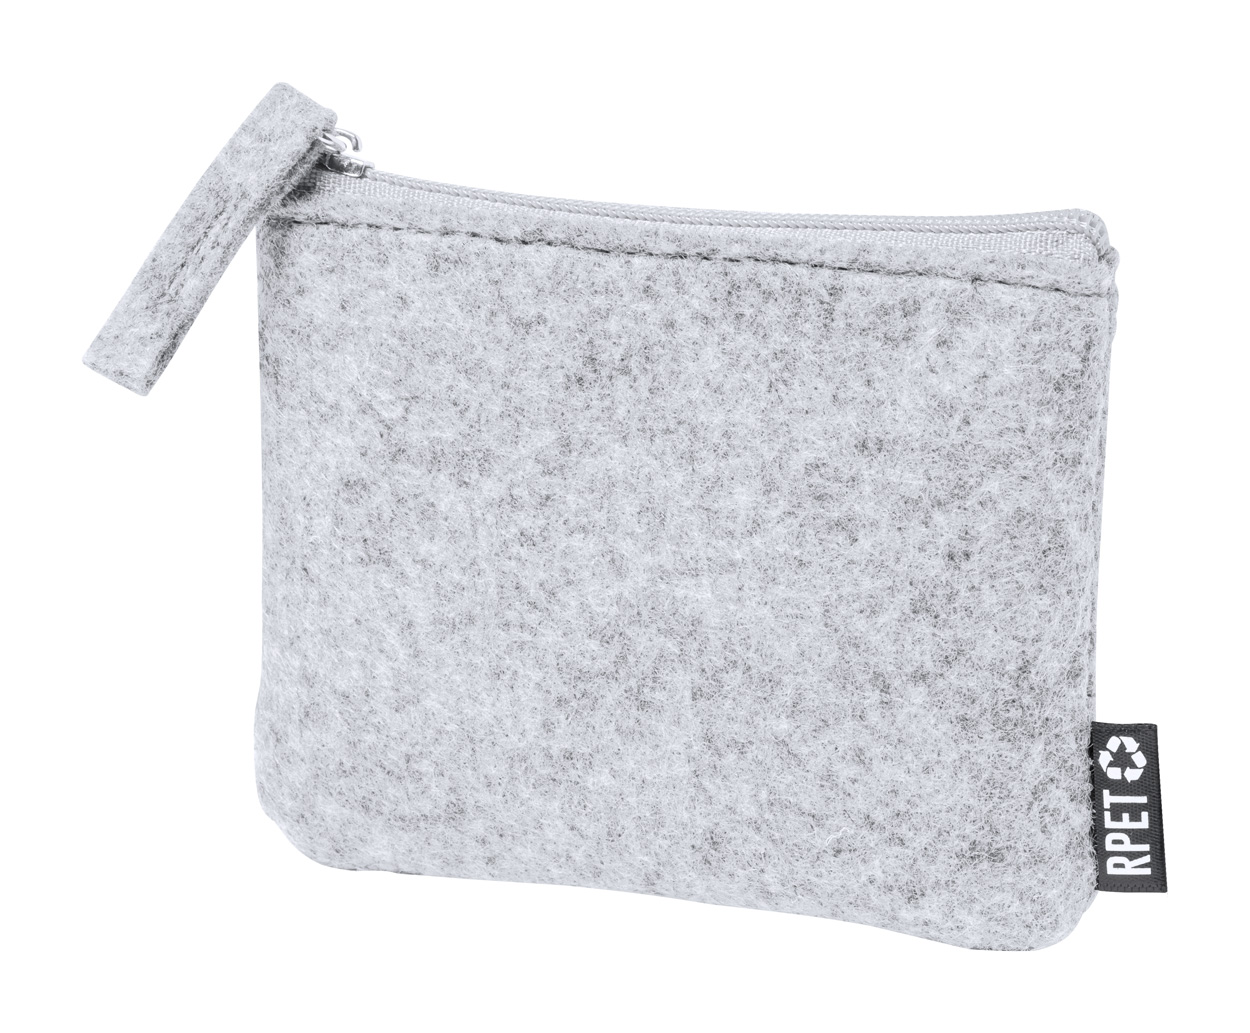 Felt wallet GAGOX made of RPET material - grey